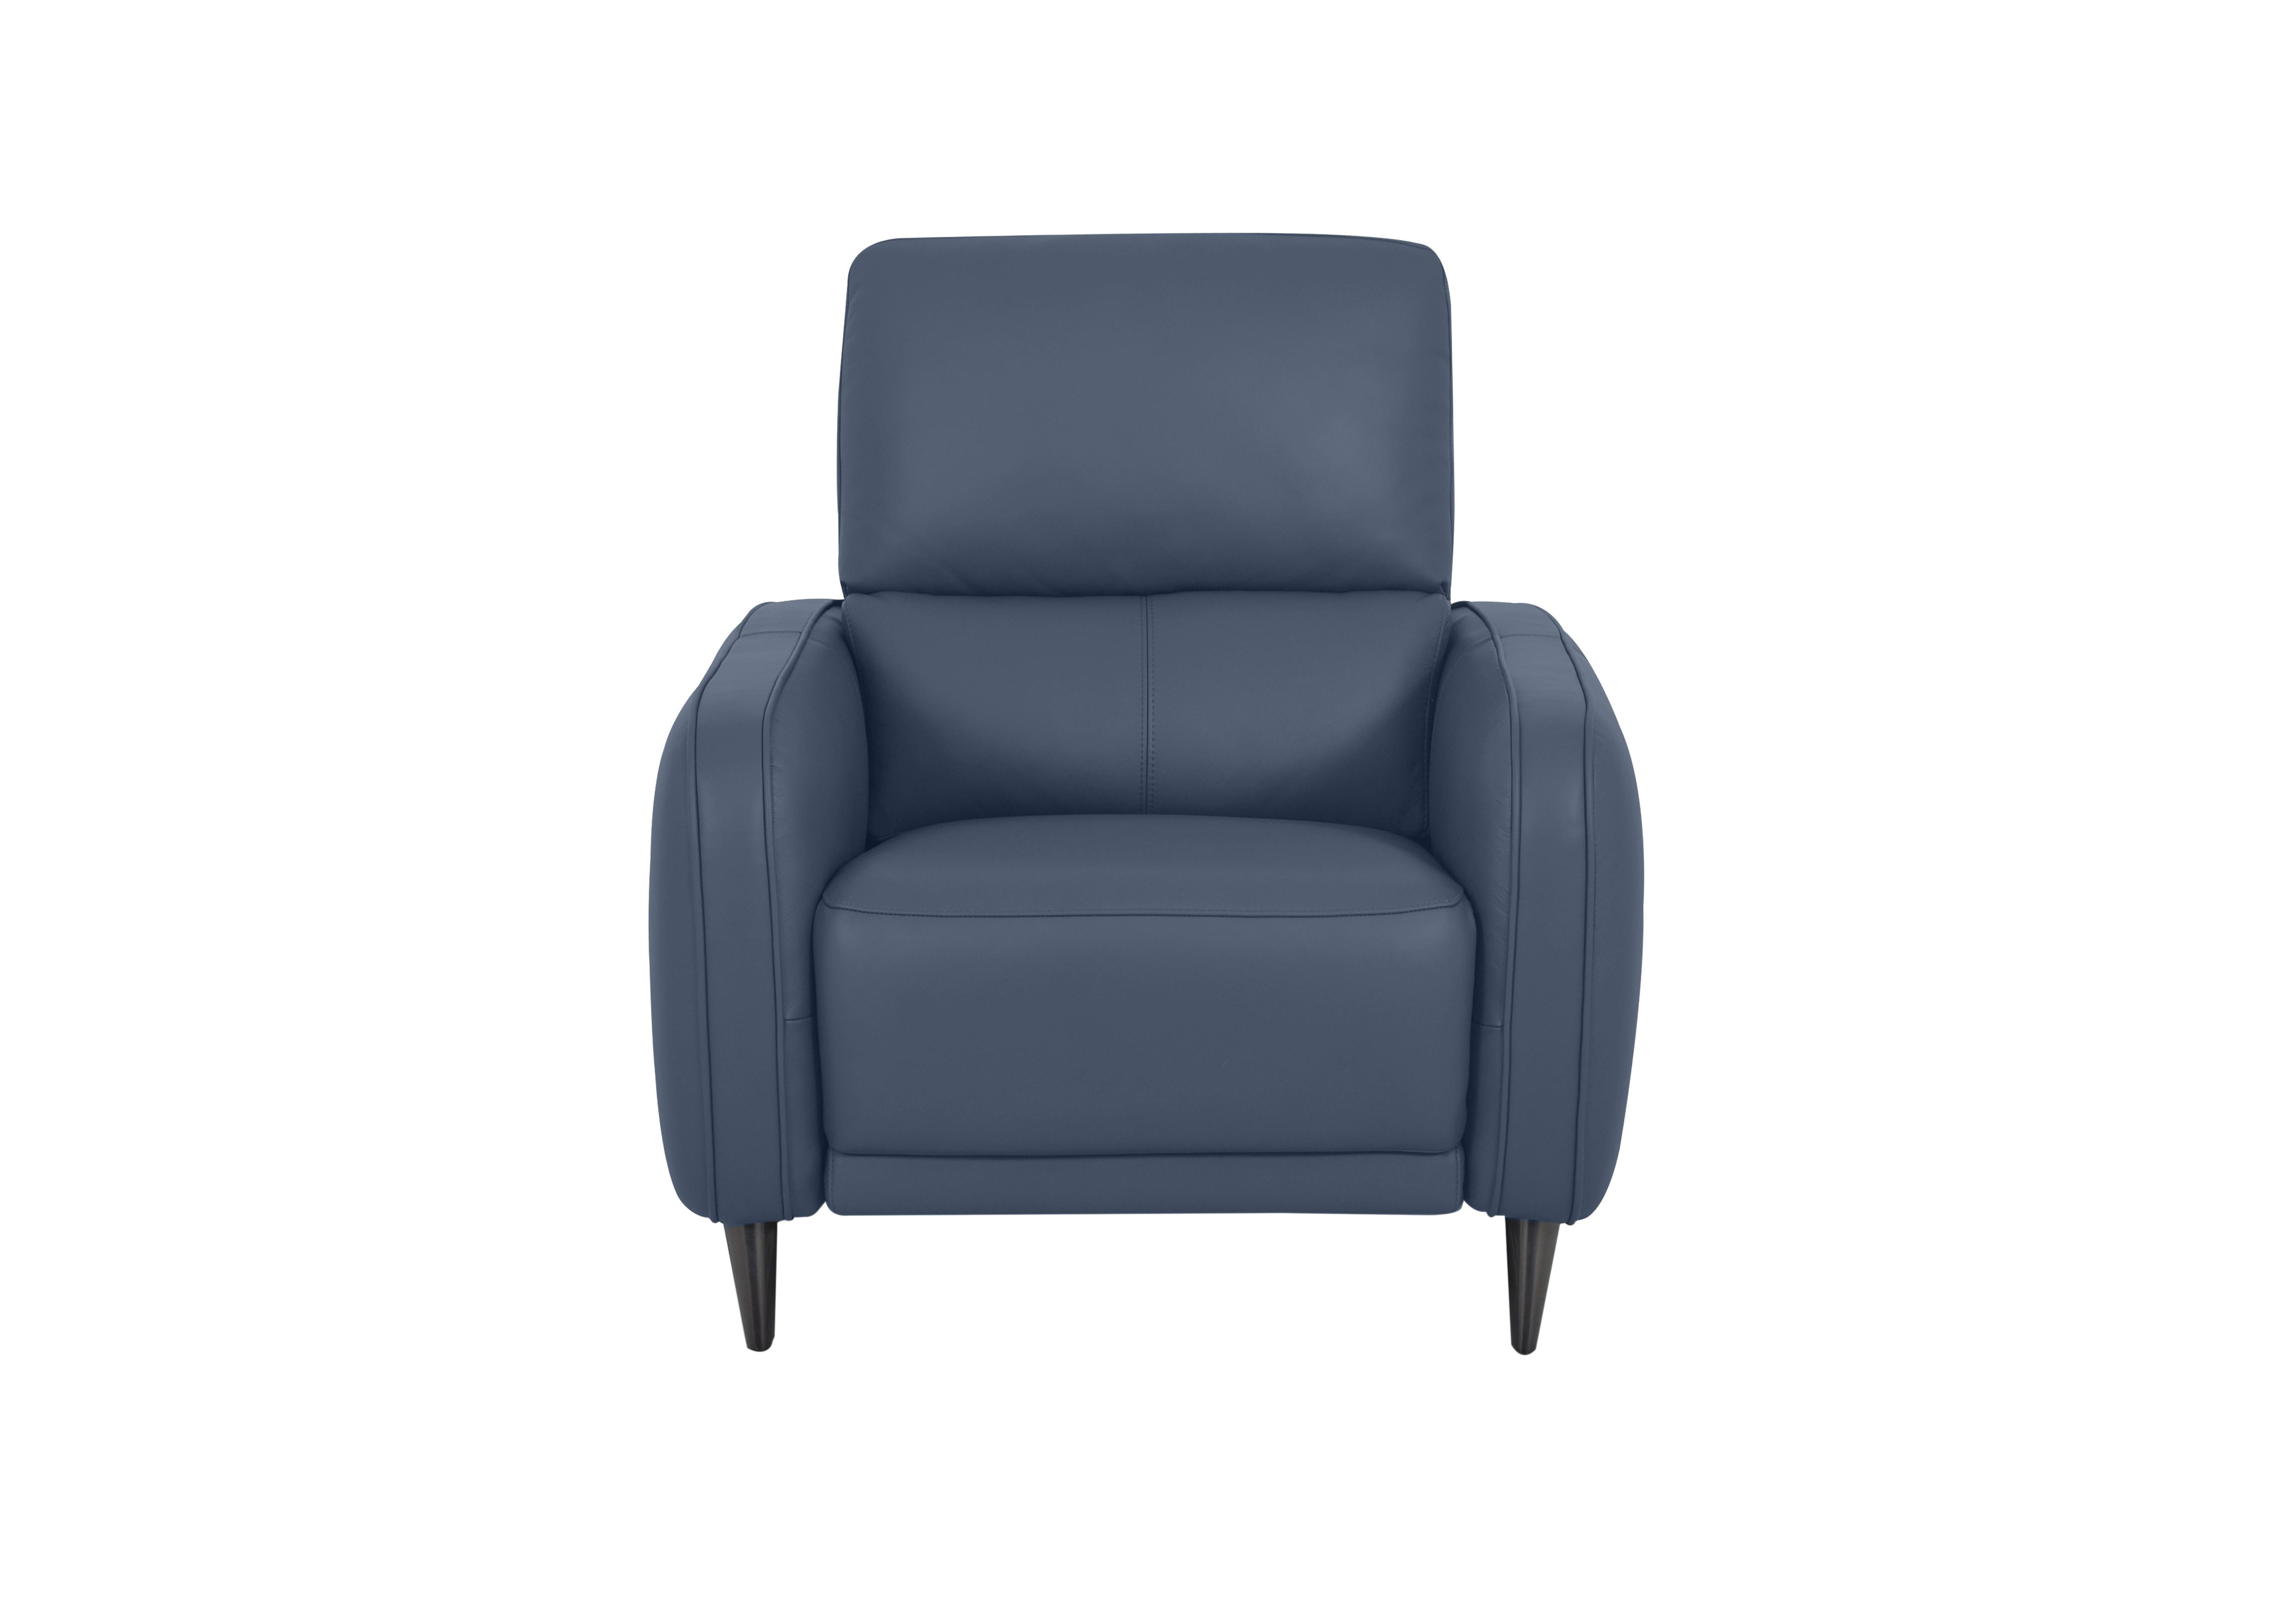 Logan Leather Chair in Nn-518e Ocean Blue on Furniture Village